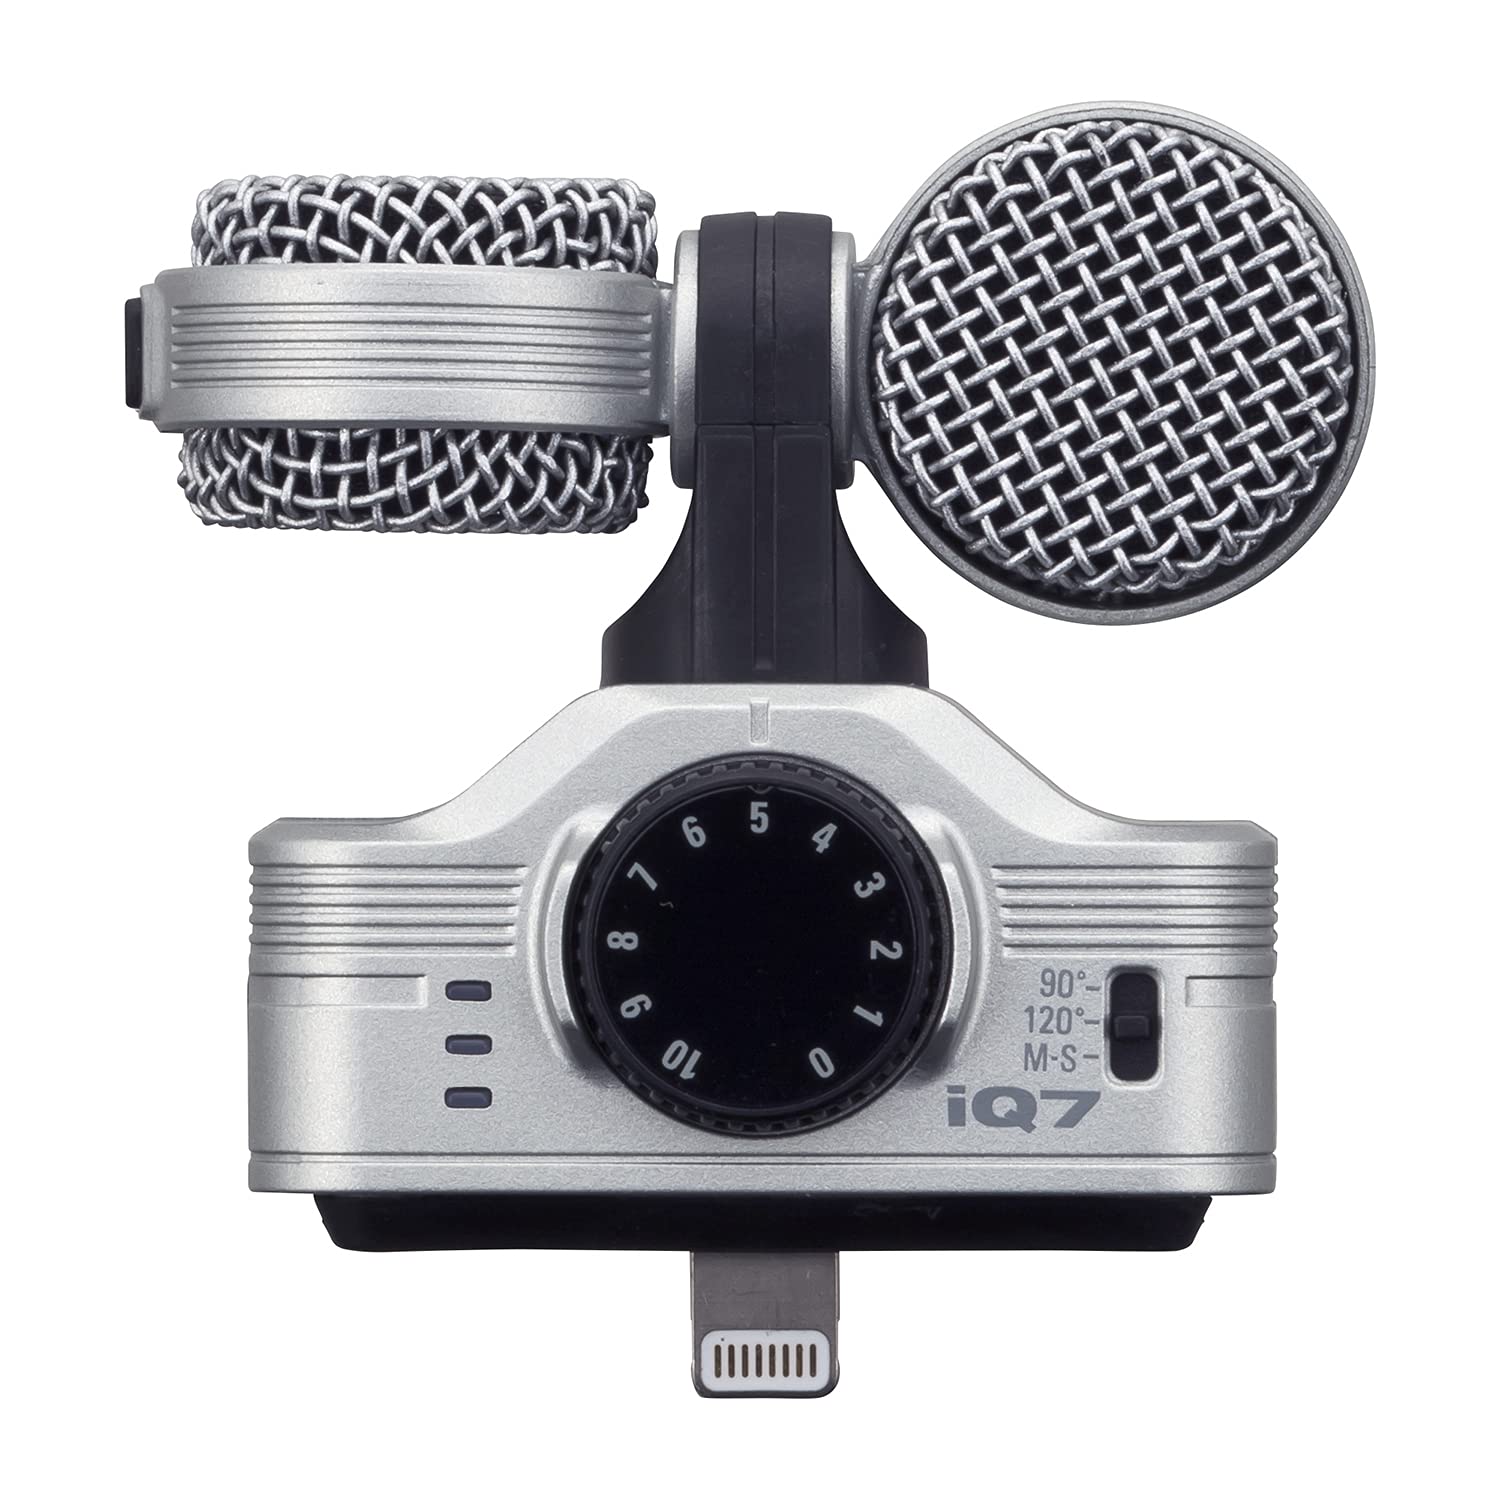 ZOOM iQ7 MS Stereo Microphone for iPhone/iPad